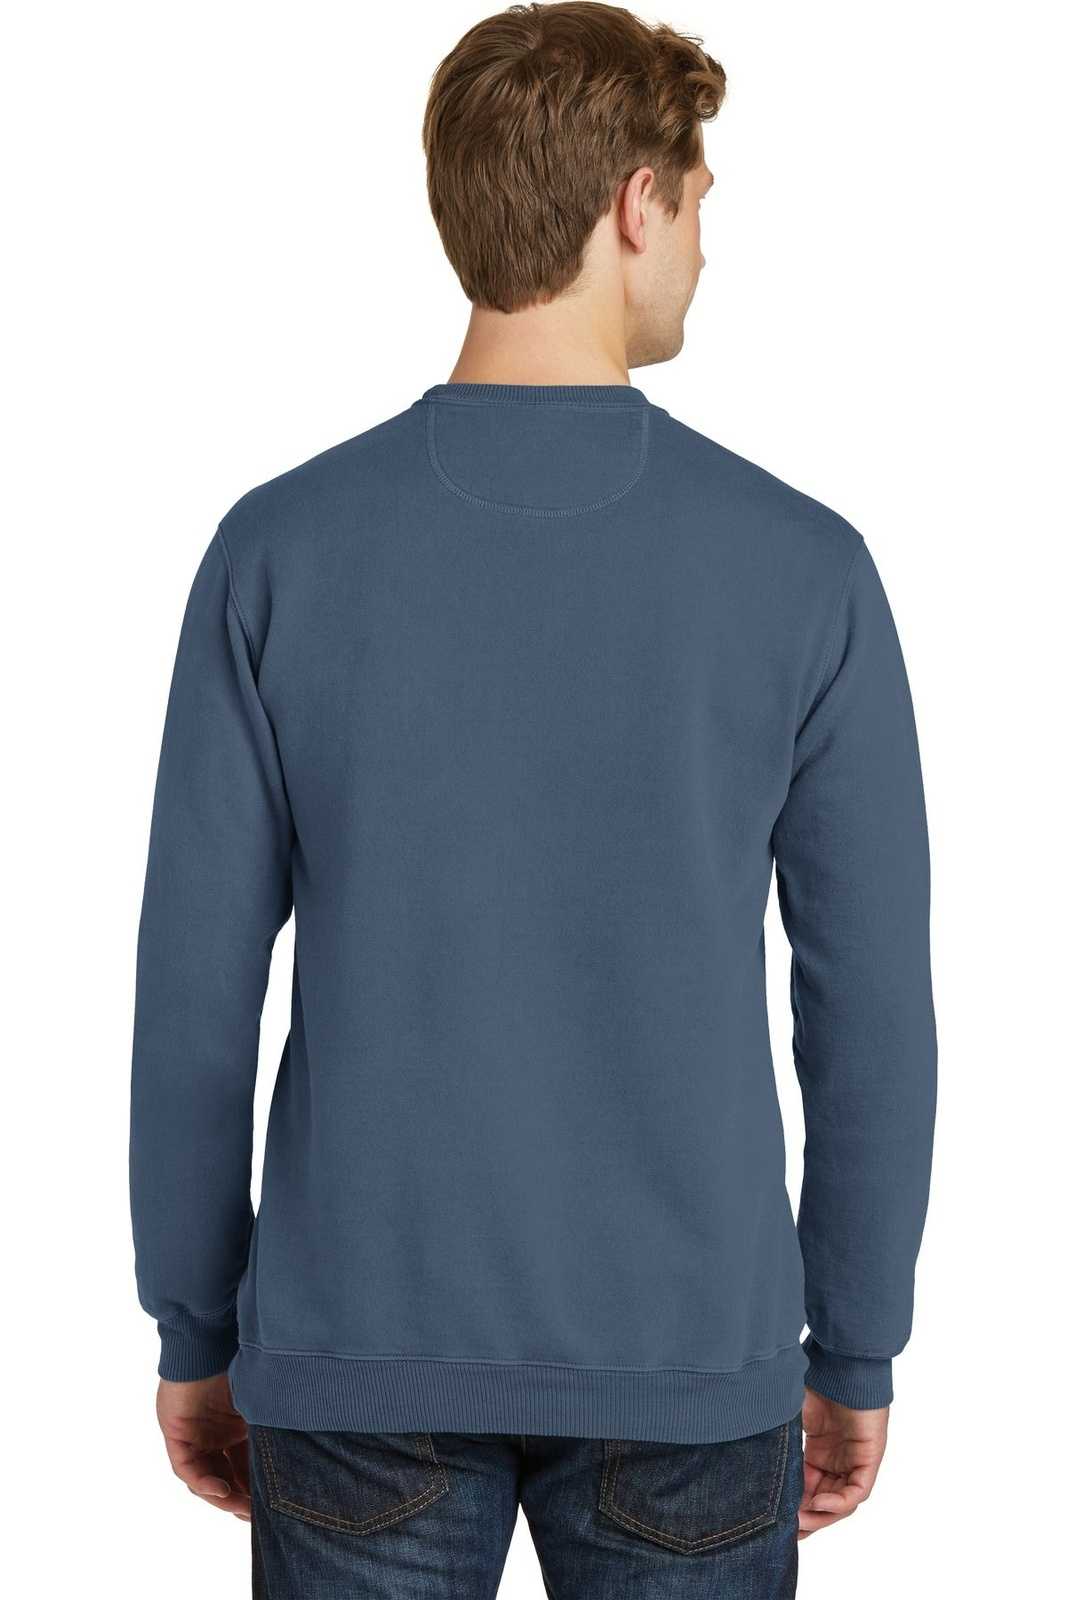 Port &amp; Company PC098 Beach Wash Garment-Dyed Sweatshirt - Denim Blue - HIT a Double - 2